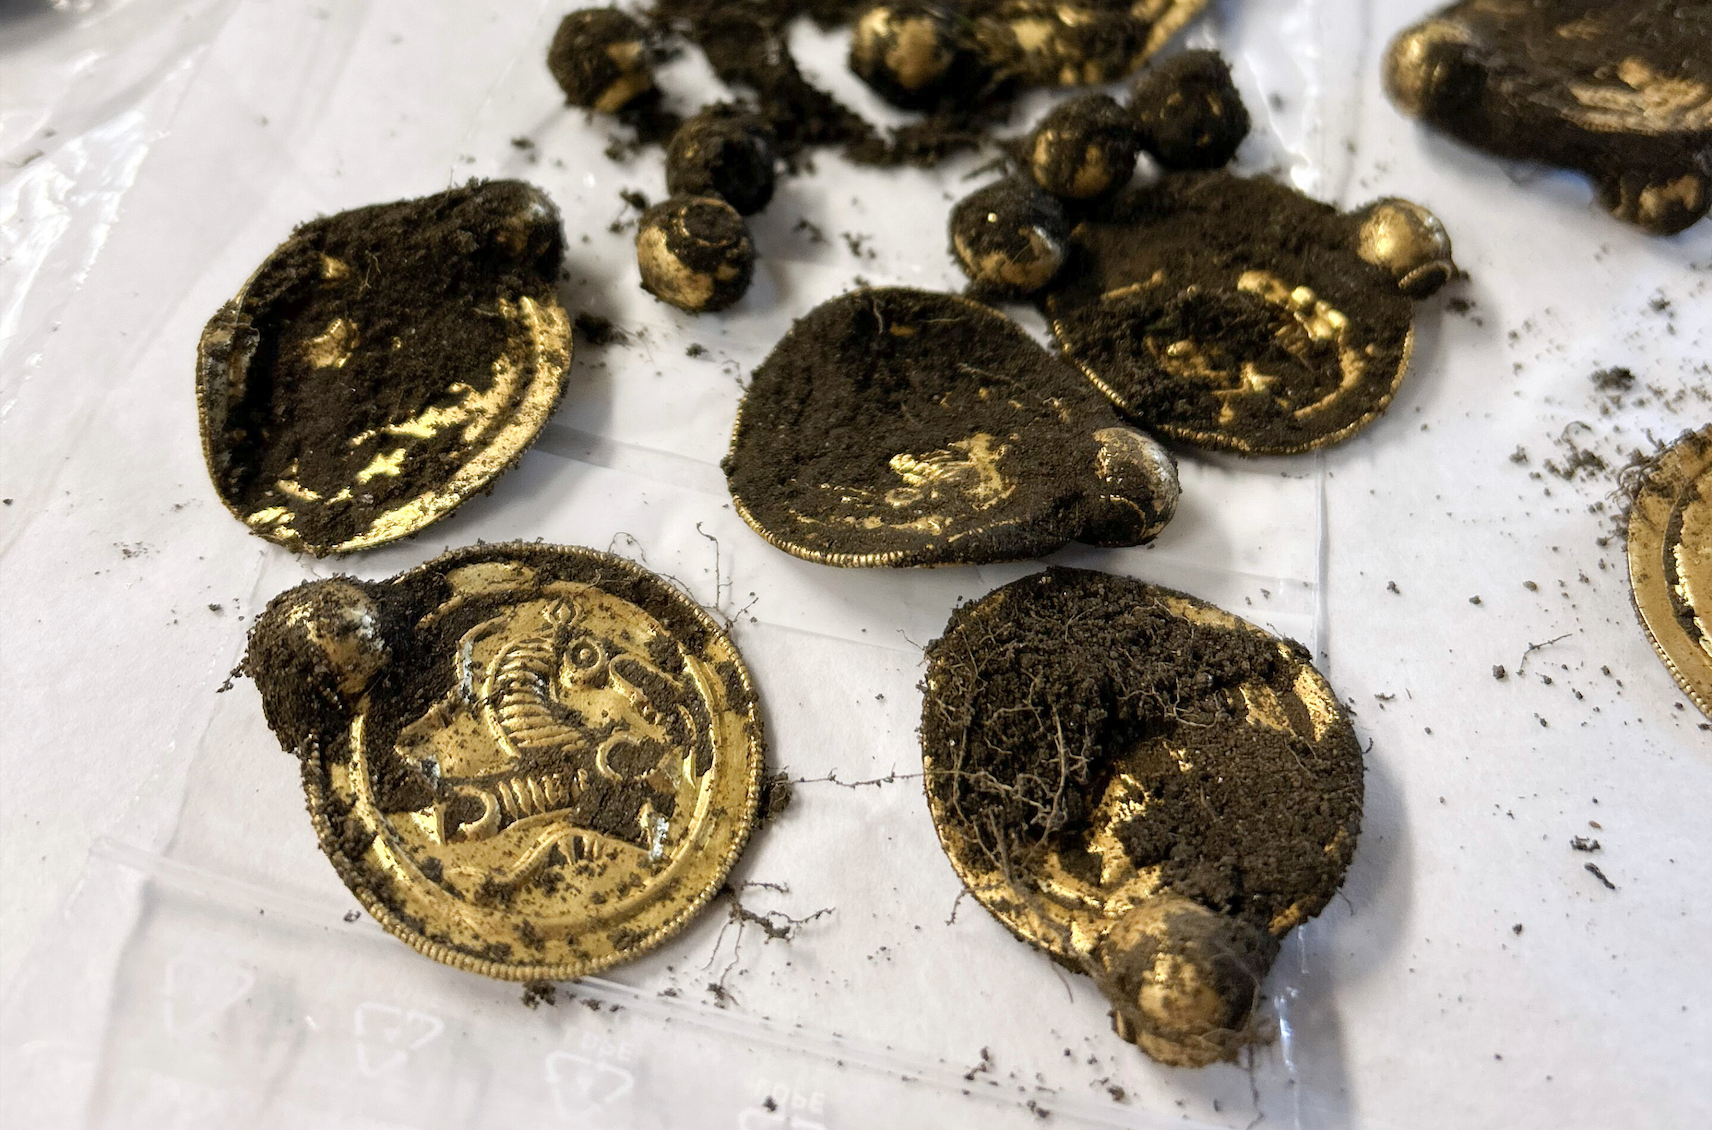 A man discovers incredible ancient treasure using a metal detector